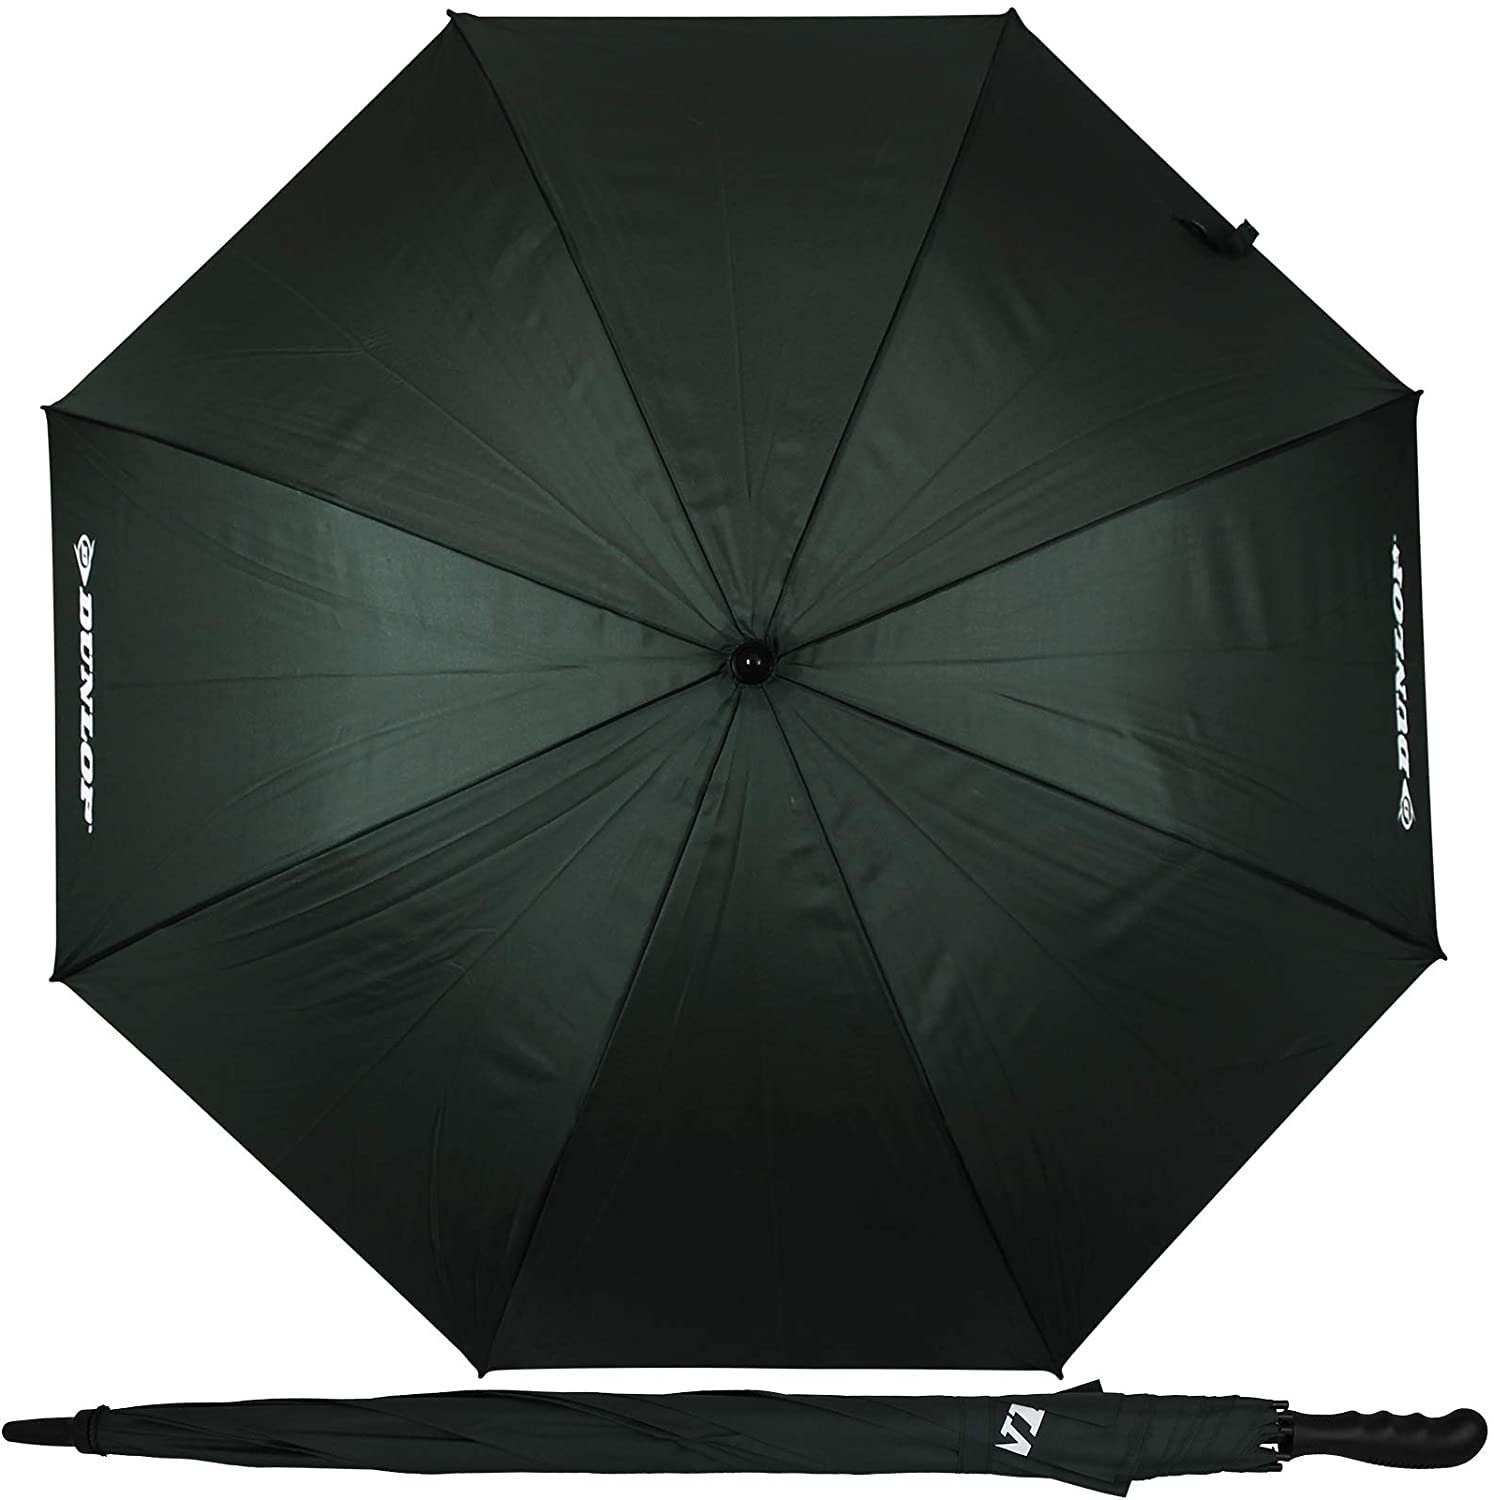 Dokado Partnerschirm XXL Paar Regenschirm Personen Stockschirm Farbwahl Doppelregenschirm für Familienschirm Partnerschirm 130cm mit 2 Dunlop grün